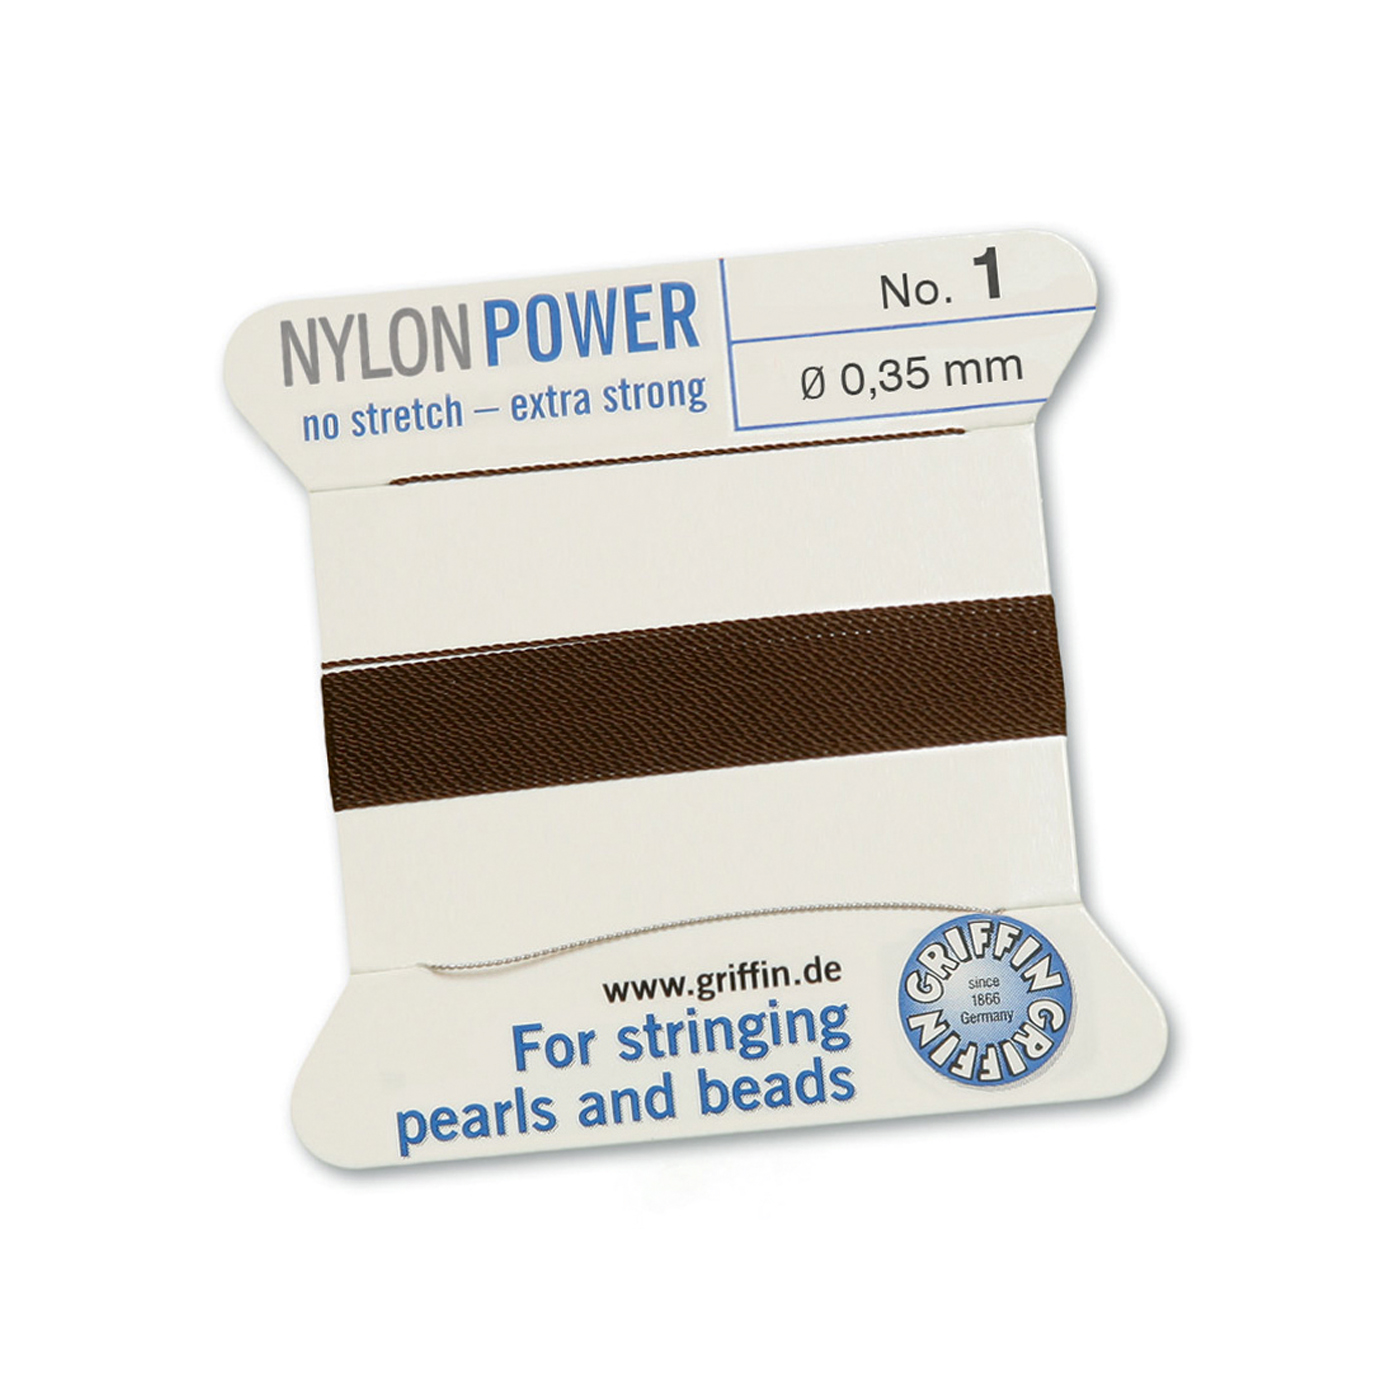 Bead Cord NylonPower, Brown, No. 1 - 2 m